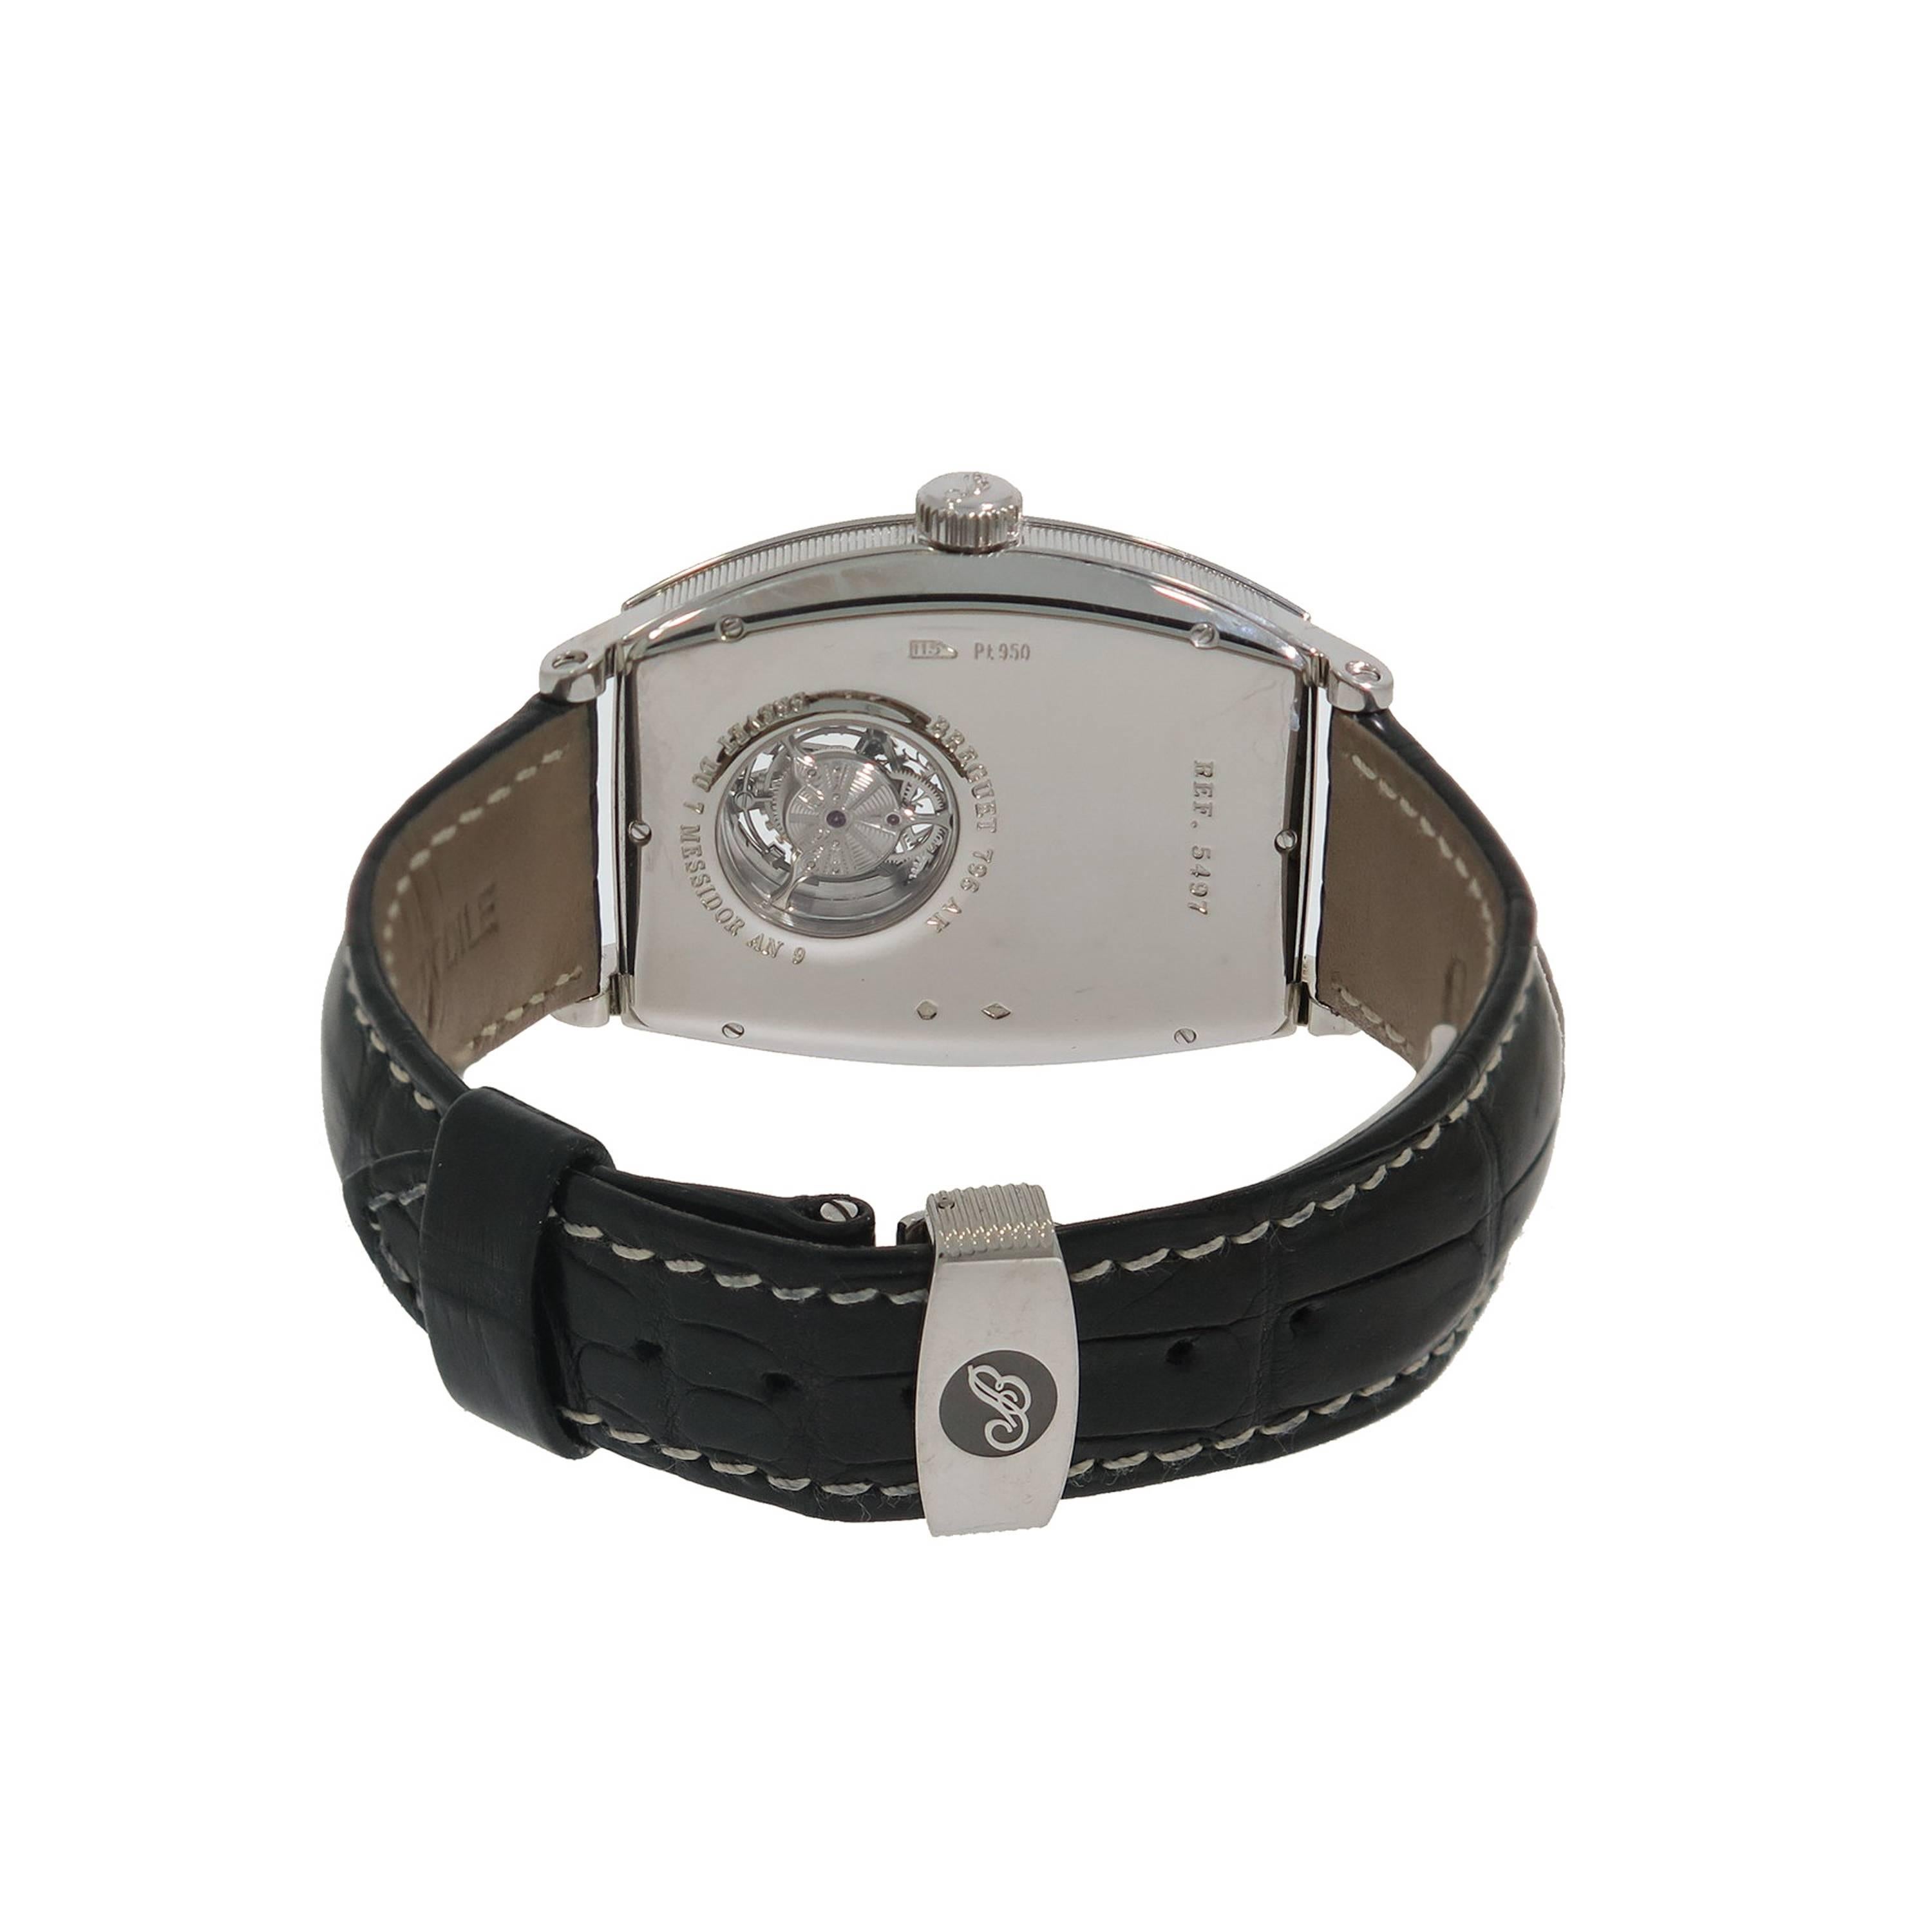 Modern Breguet Platinum Heritage Tourbillon Manual Wristwatch Ref 5497PT129V6 